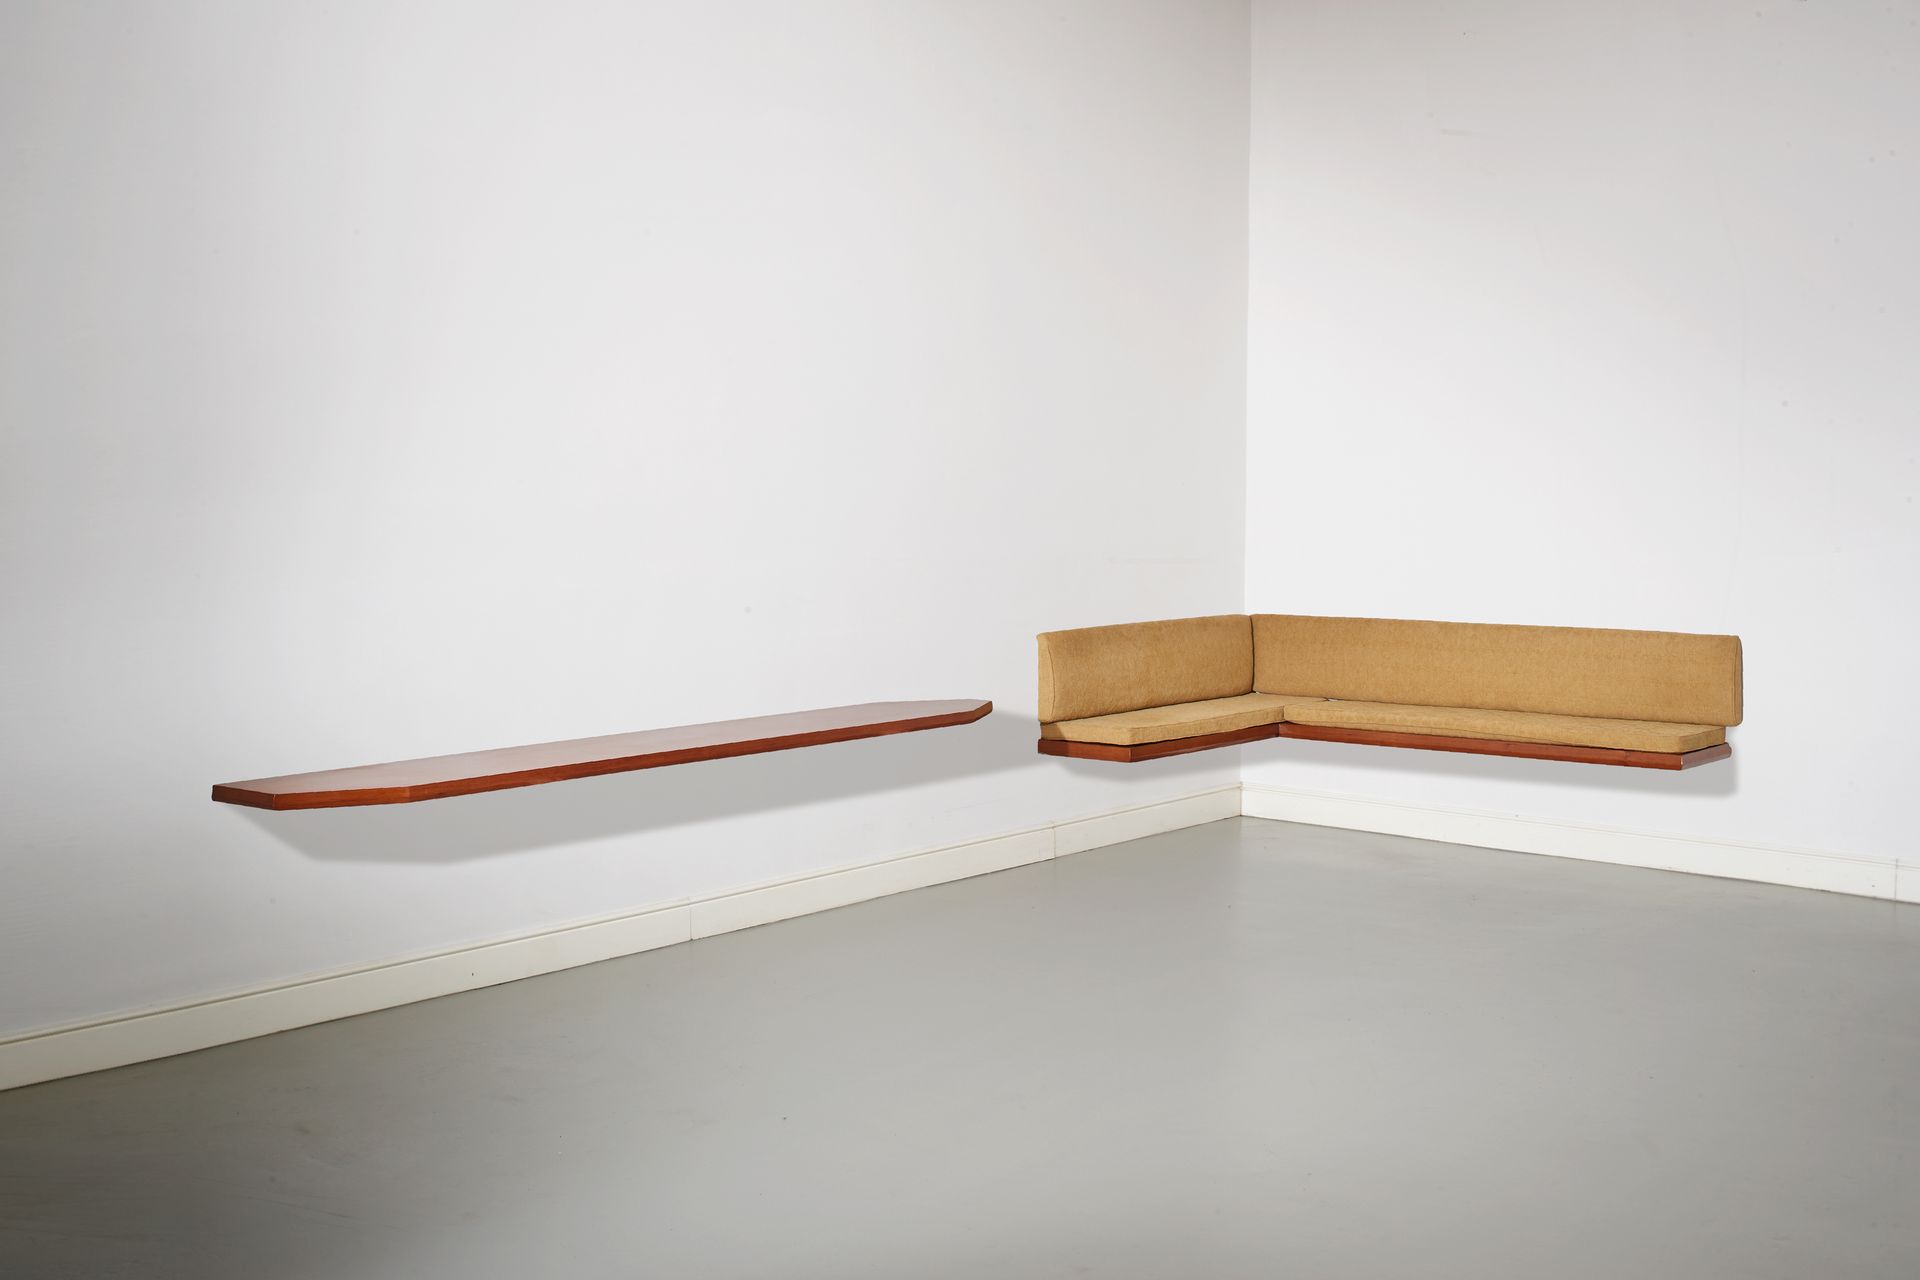 OSVALDO BORSANI 一个长凳和一个架子。胡桃木，软垫织物。Borsani Varedo生产，约1960年。 
长凳厘米40x195x44；架子厘米4&hellip;